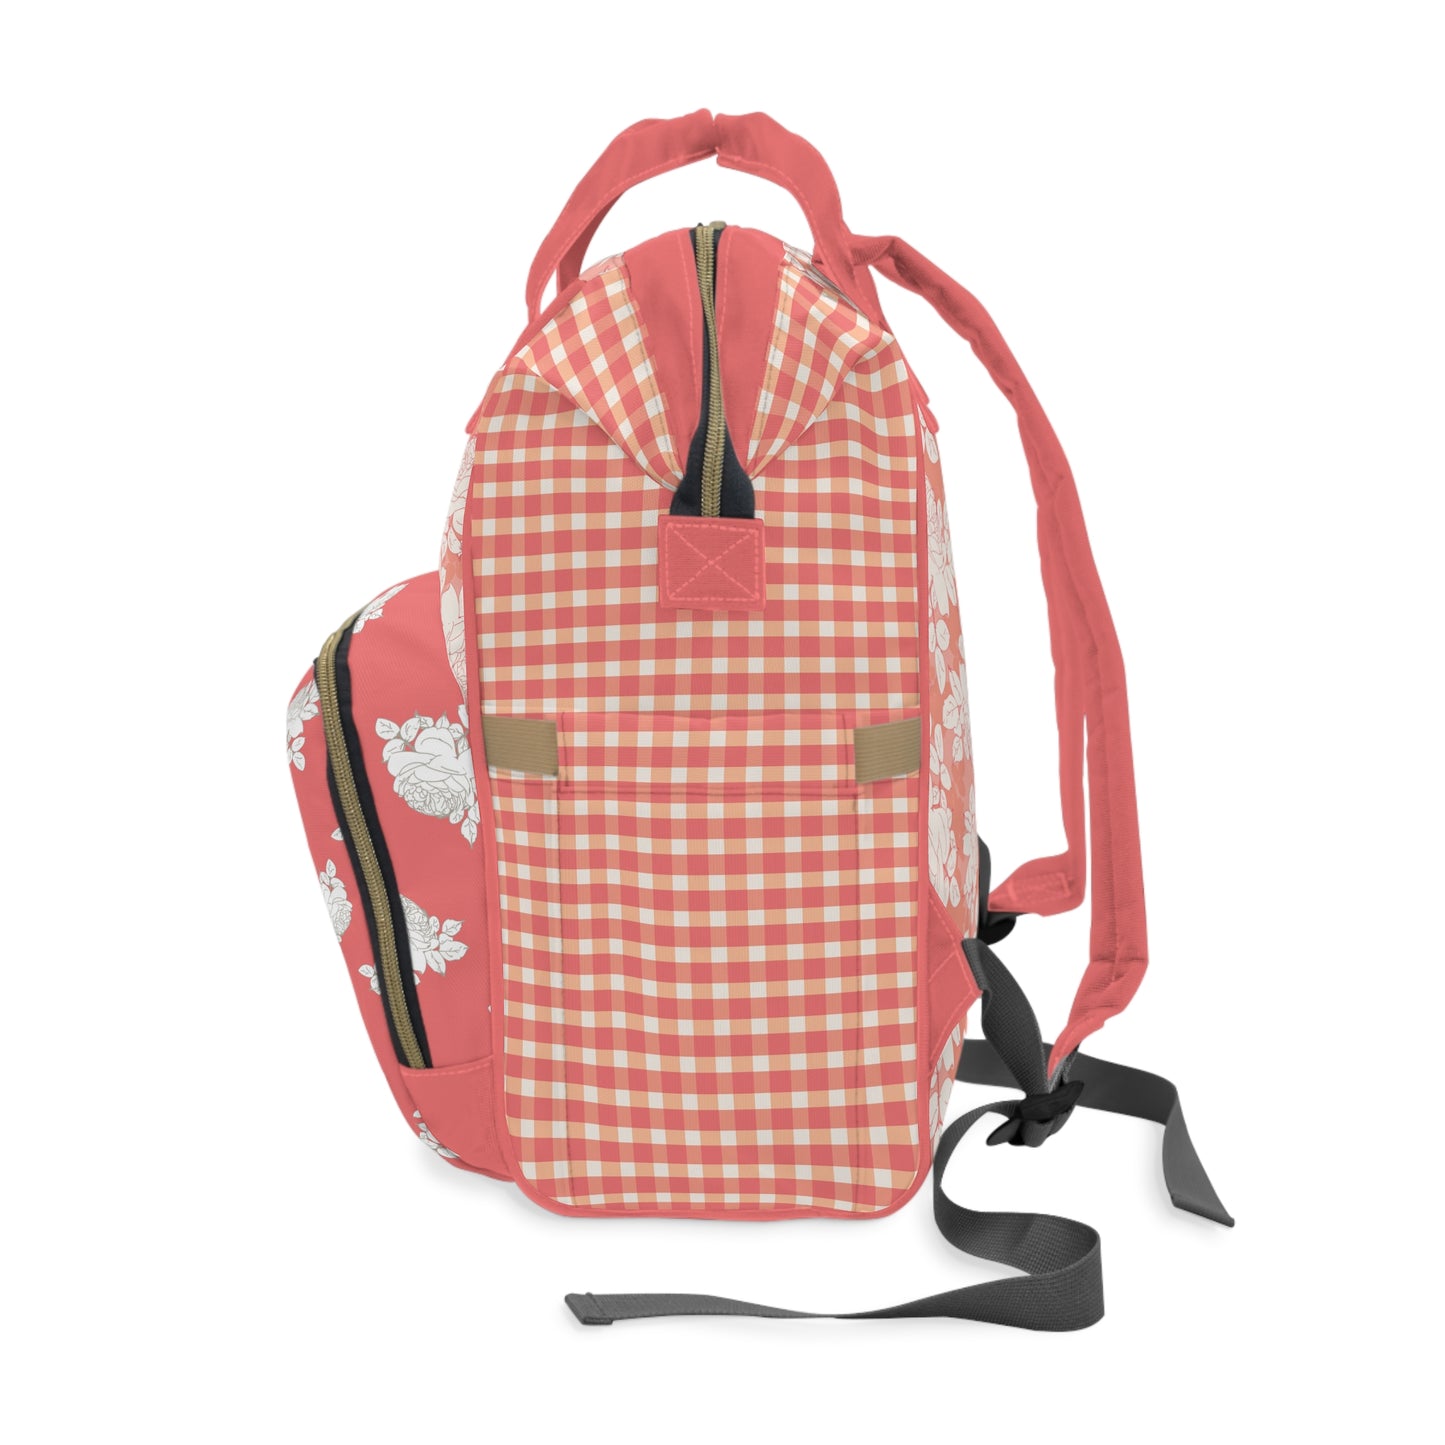 Peach and Cream Roses Multifunctional Diaper Backpack